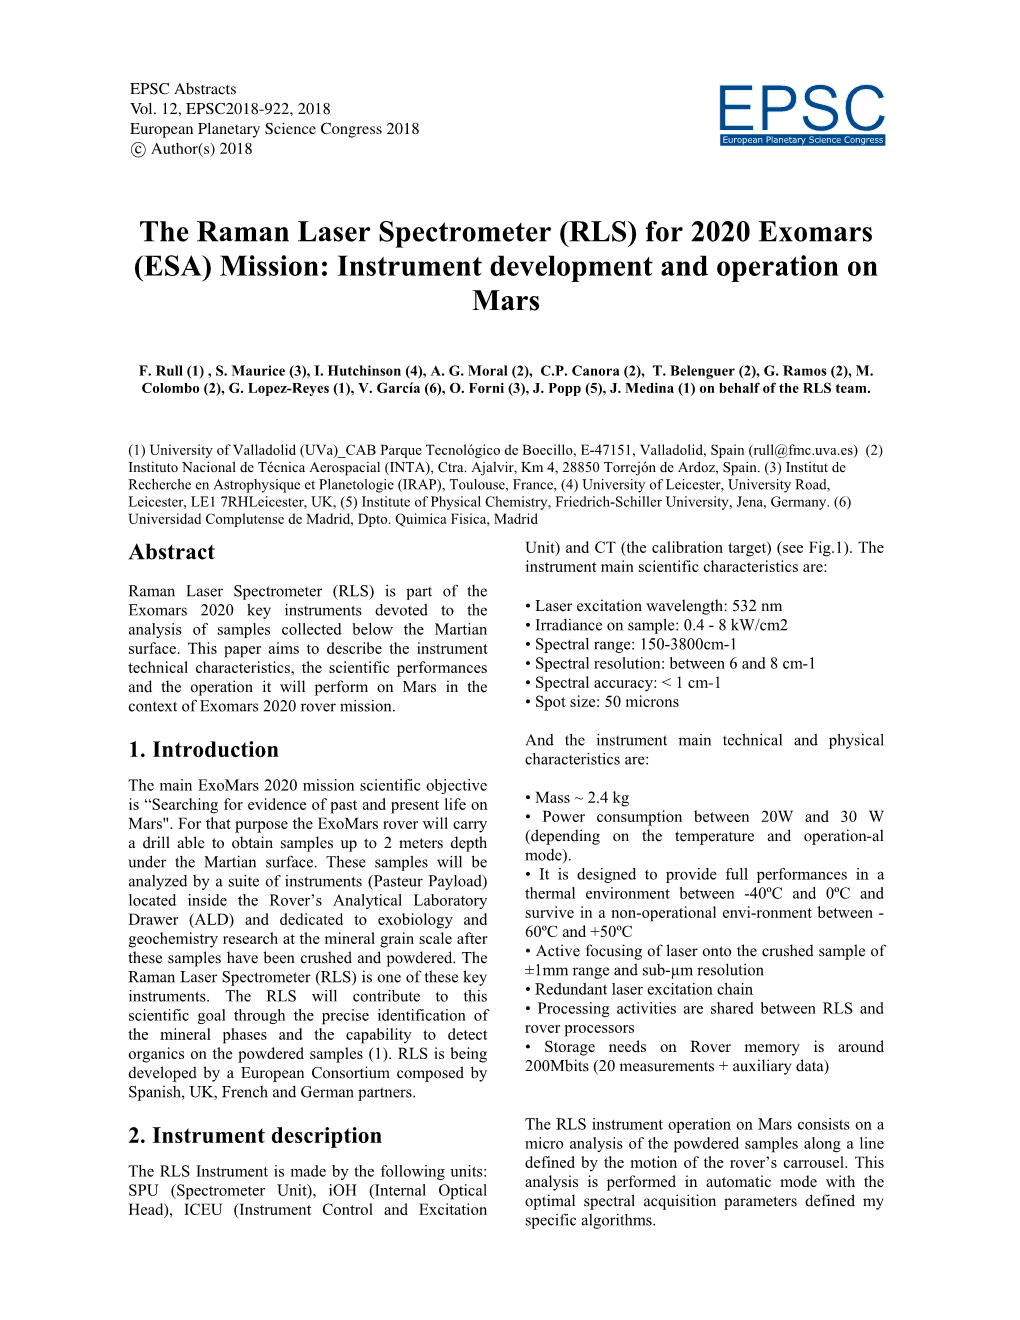 The Raman Laser Spectrometer (RLS) for 2020 Exomars (ESA) Mission: Instrument Development and Operation on Mars